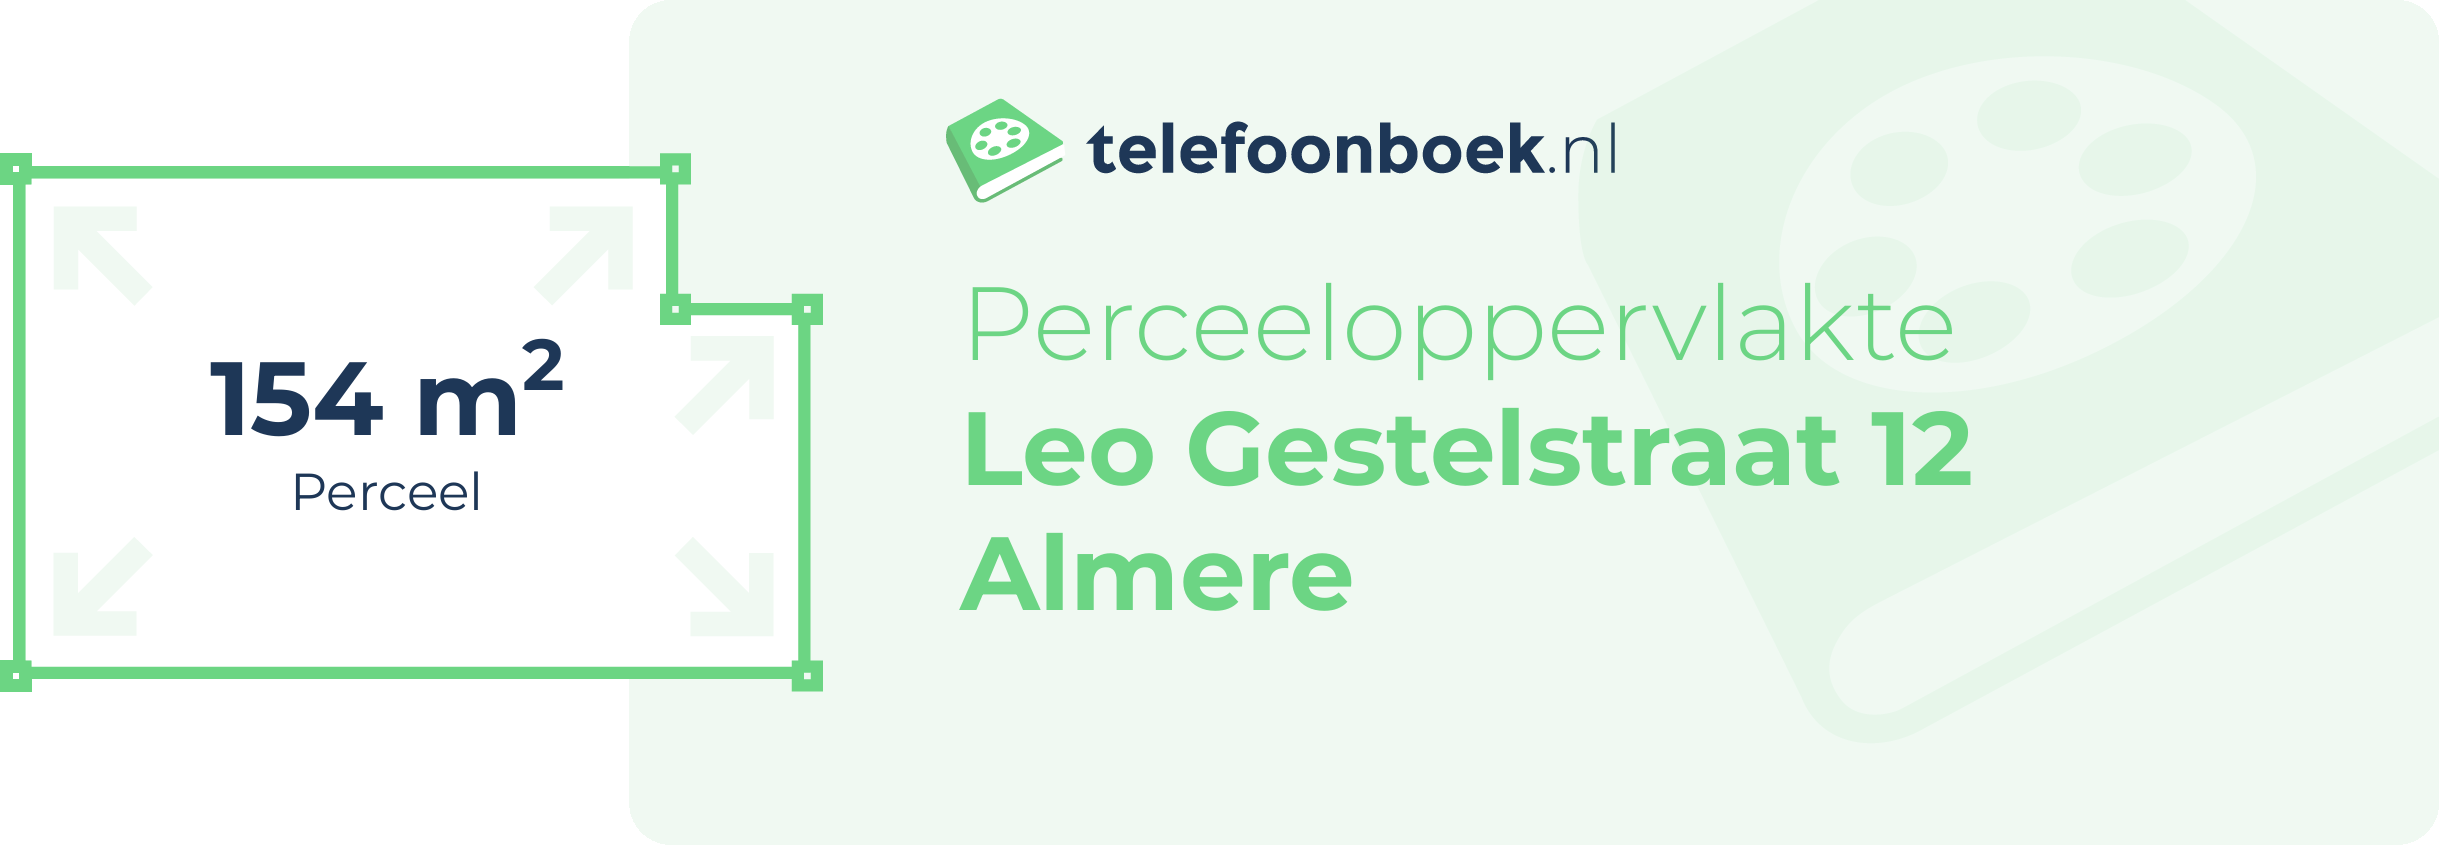 Perceeloppervlakte Leo Gestelstraat 12 Almere